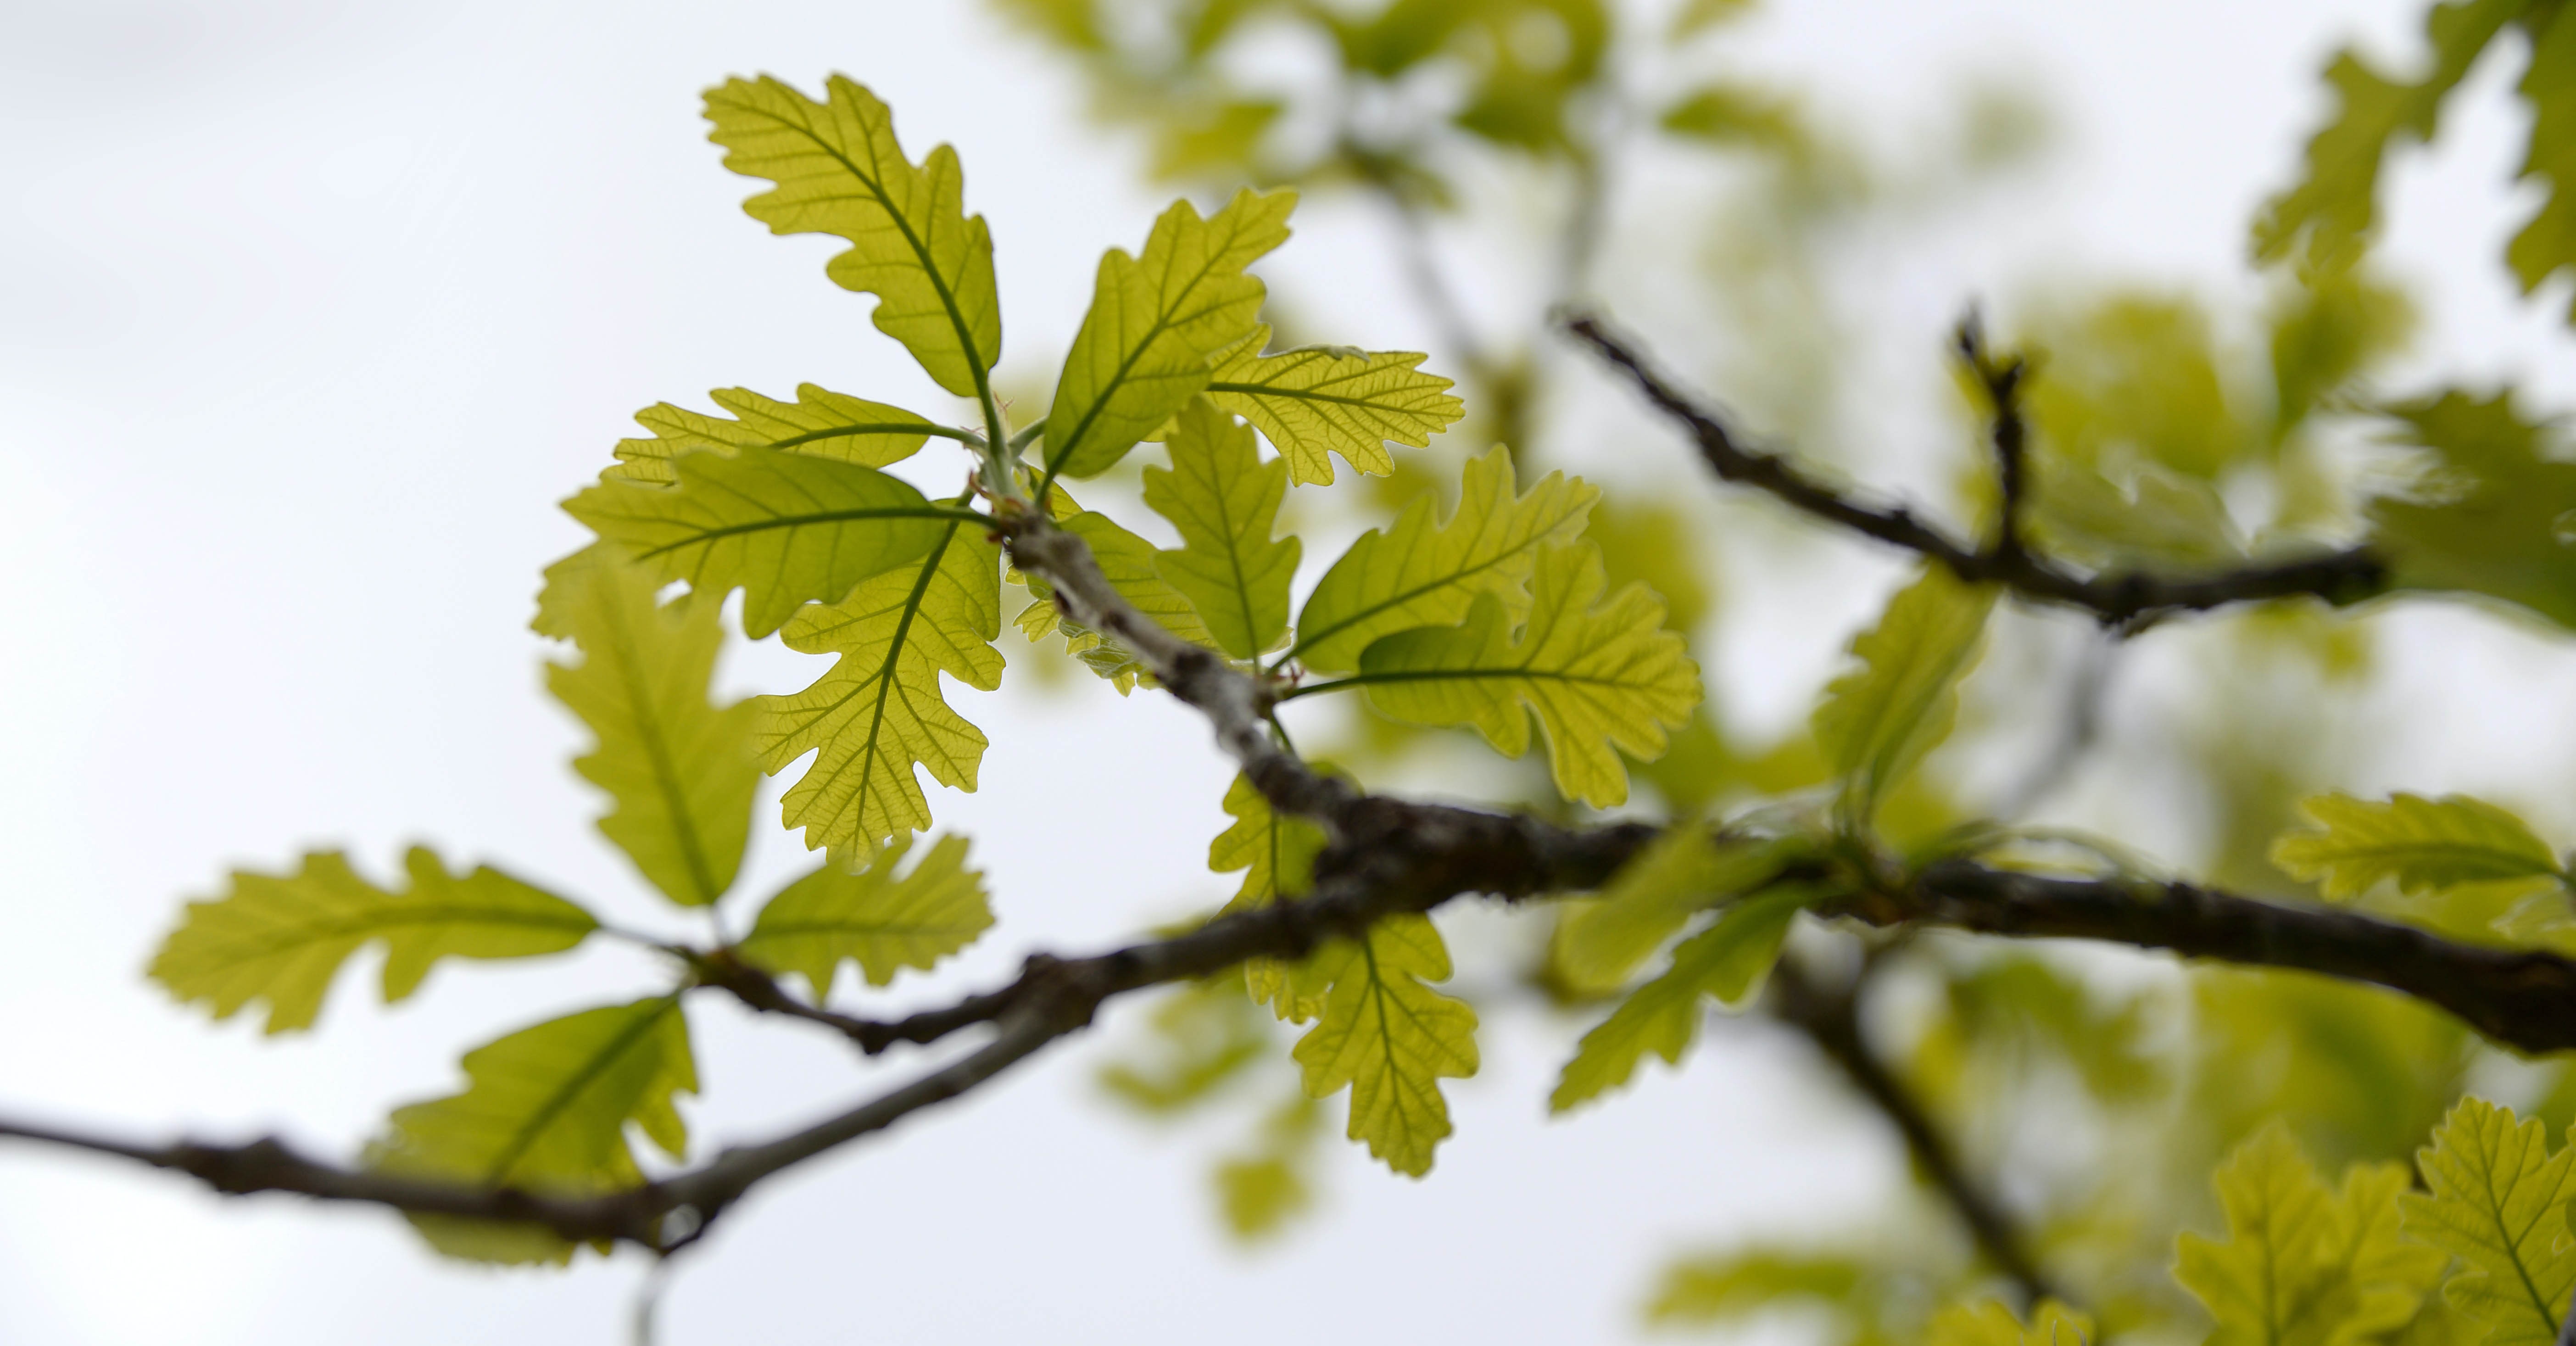 Closeup of oak tree leaves on a branch.